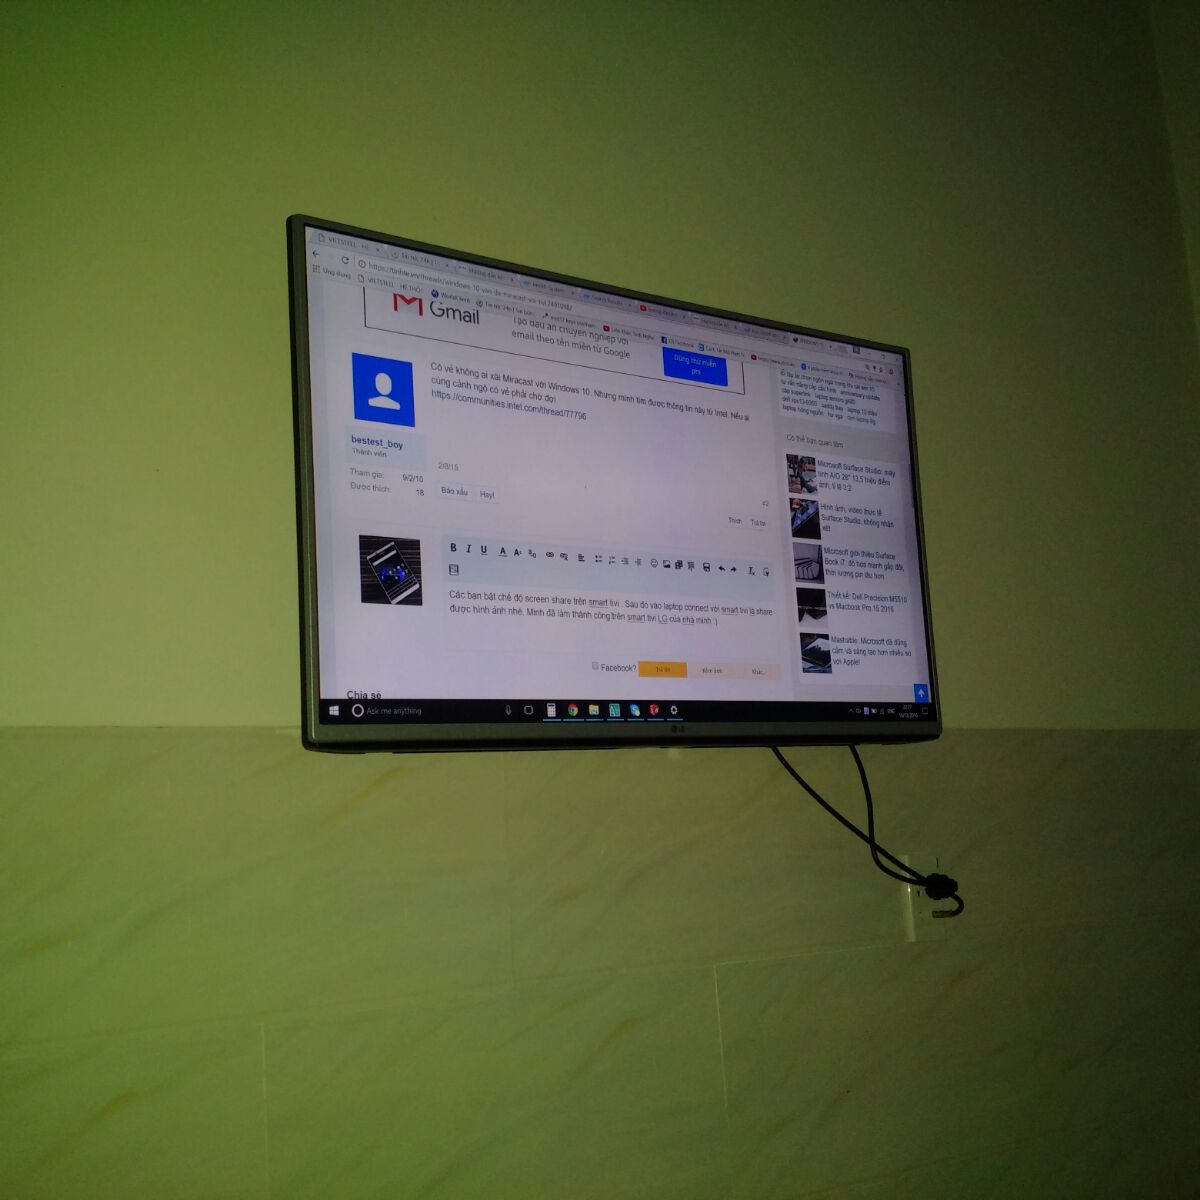 miracast windows 10 on an lg smart tv